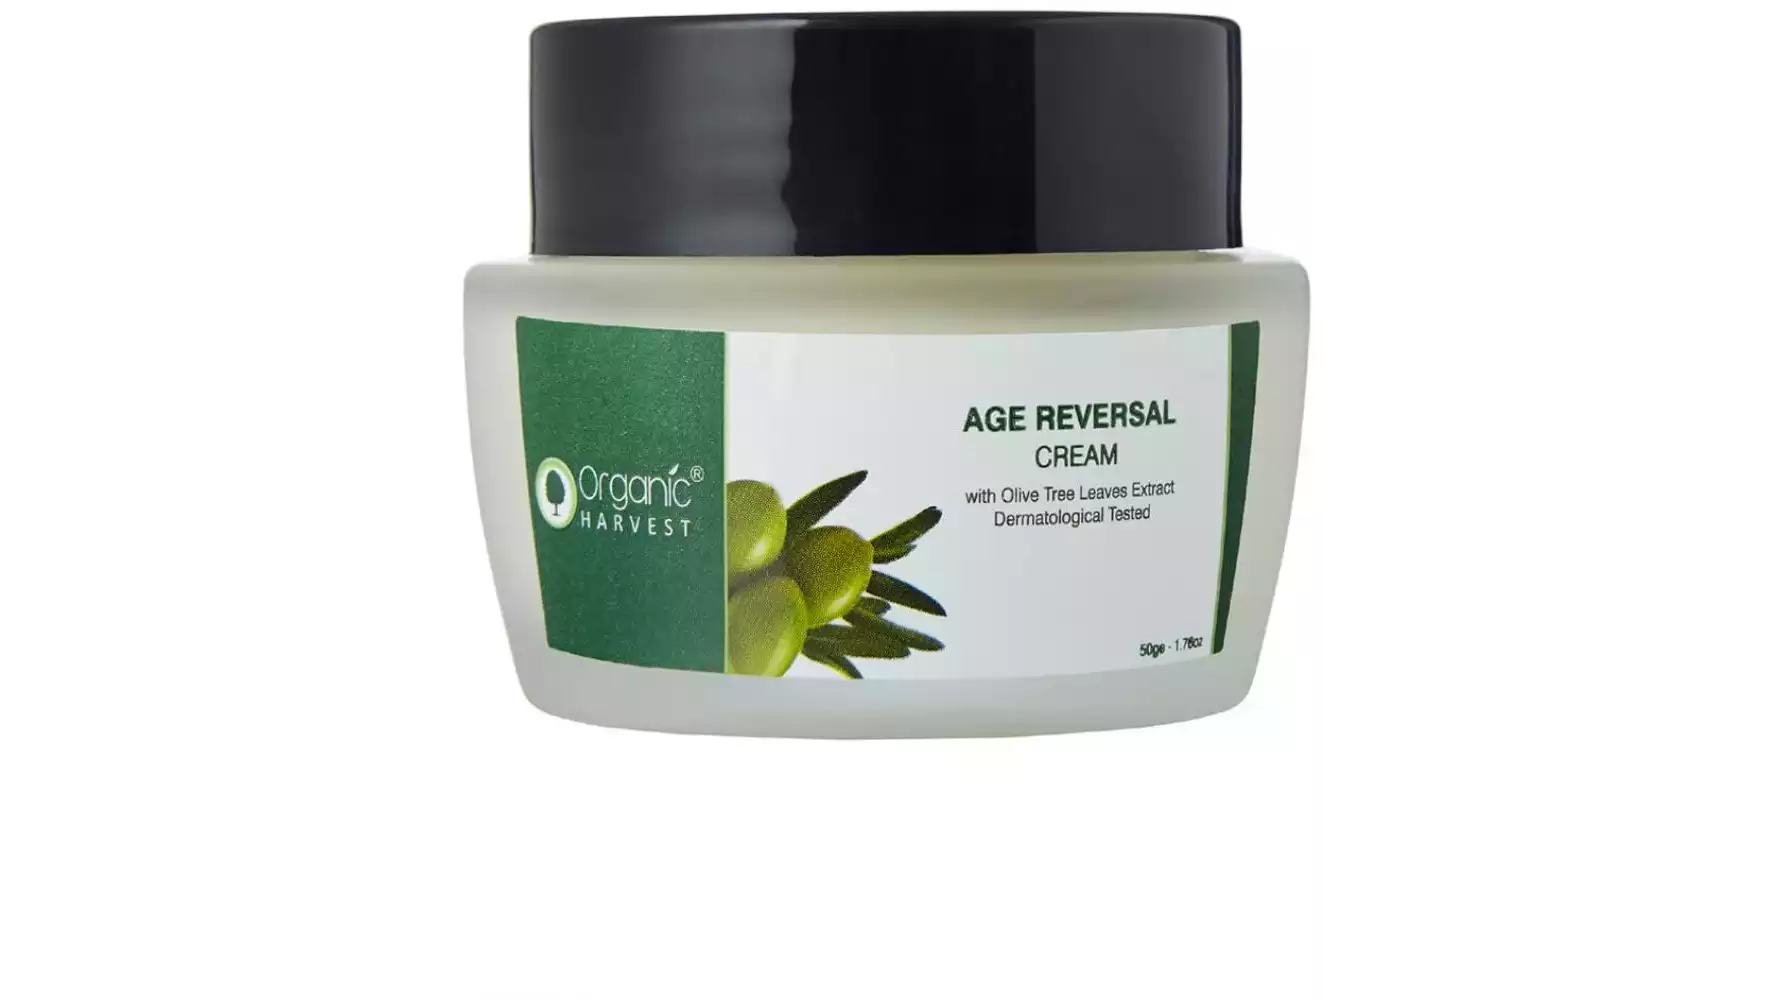 Organic Harvest Age Reversal Cream (50g)